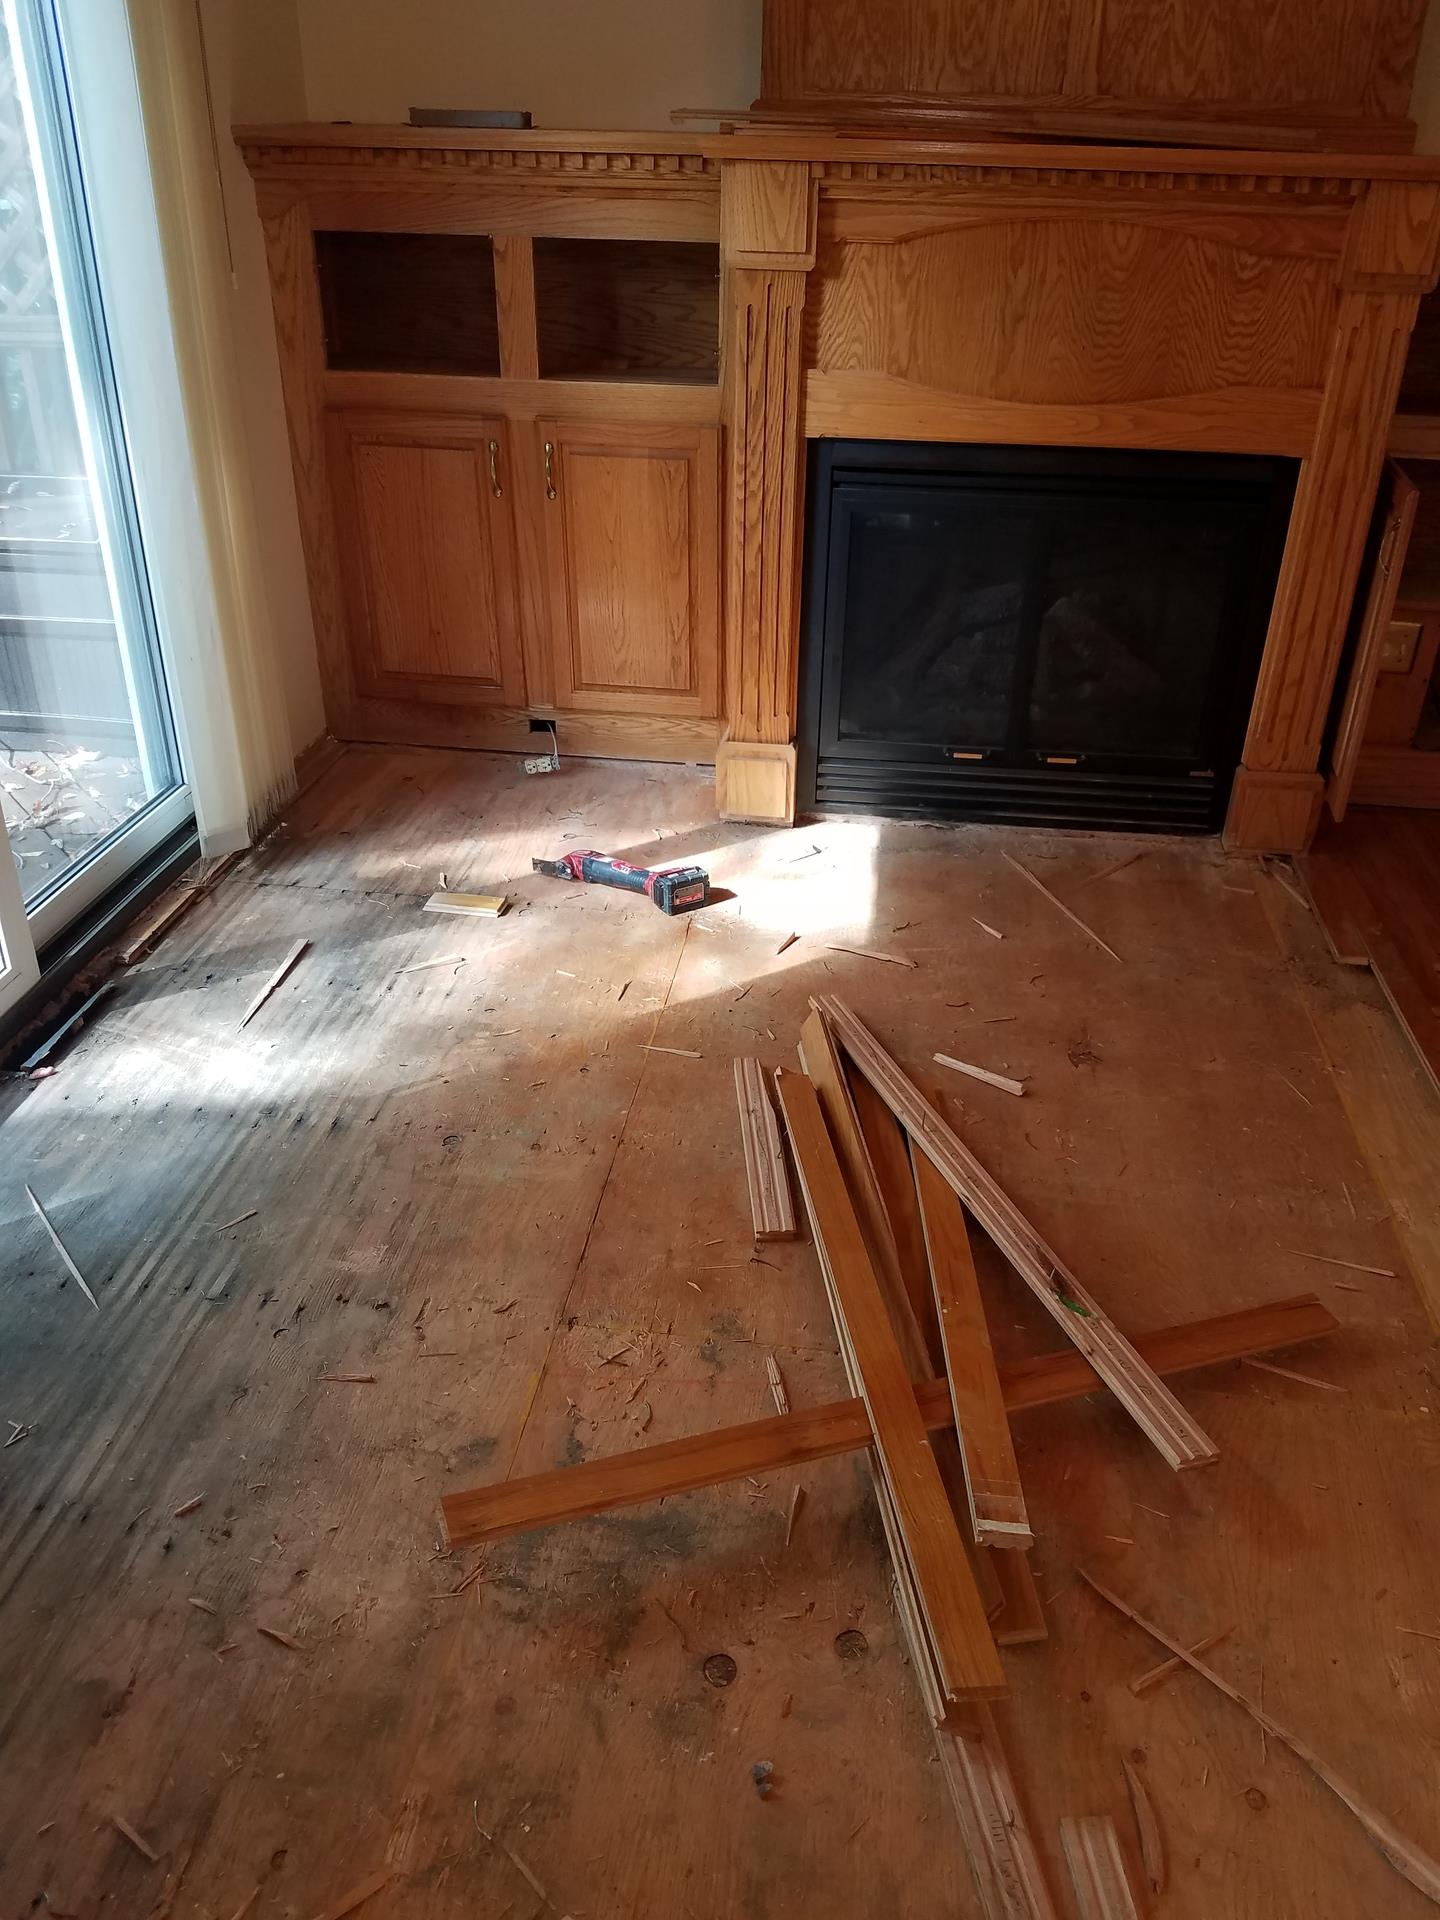 Floor boards being repaired